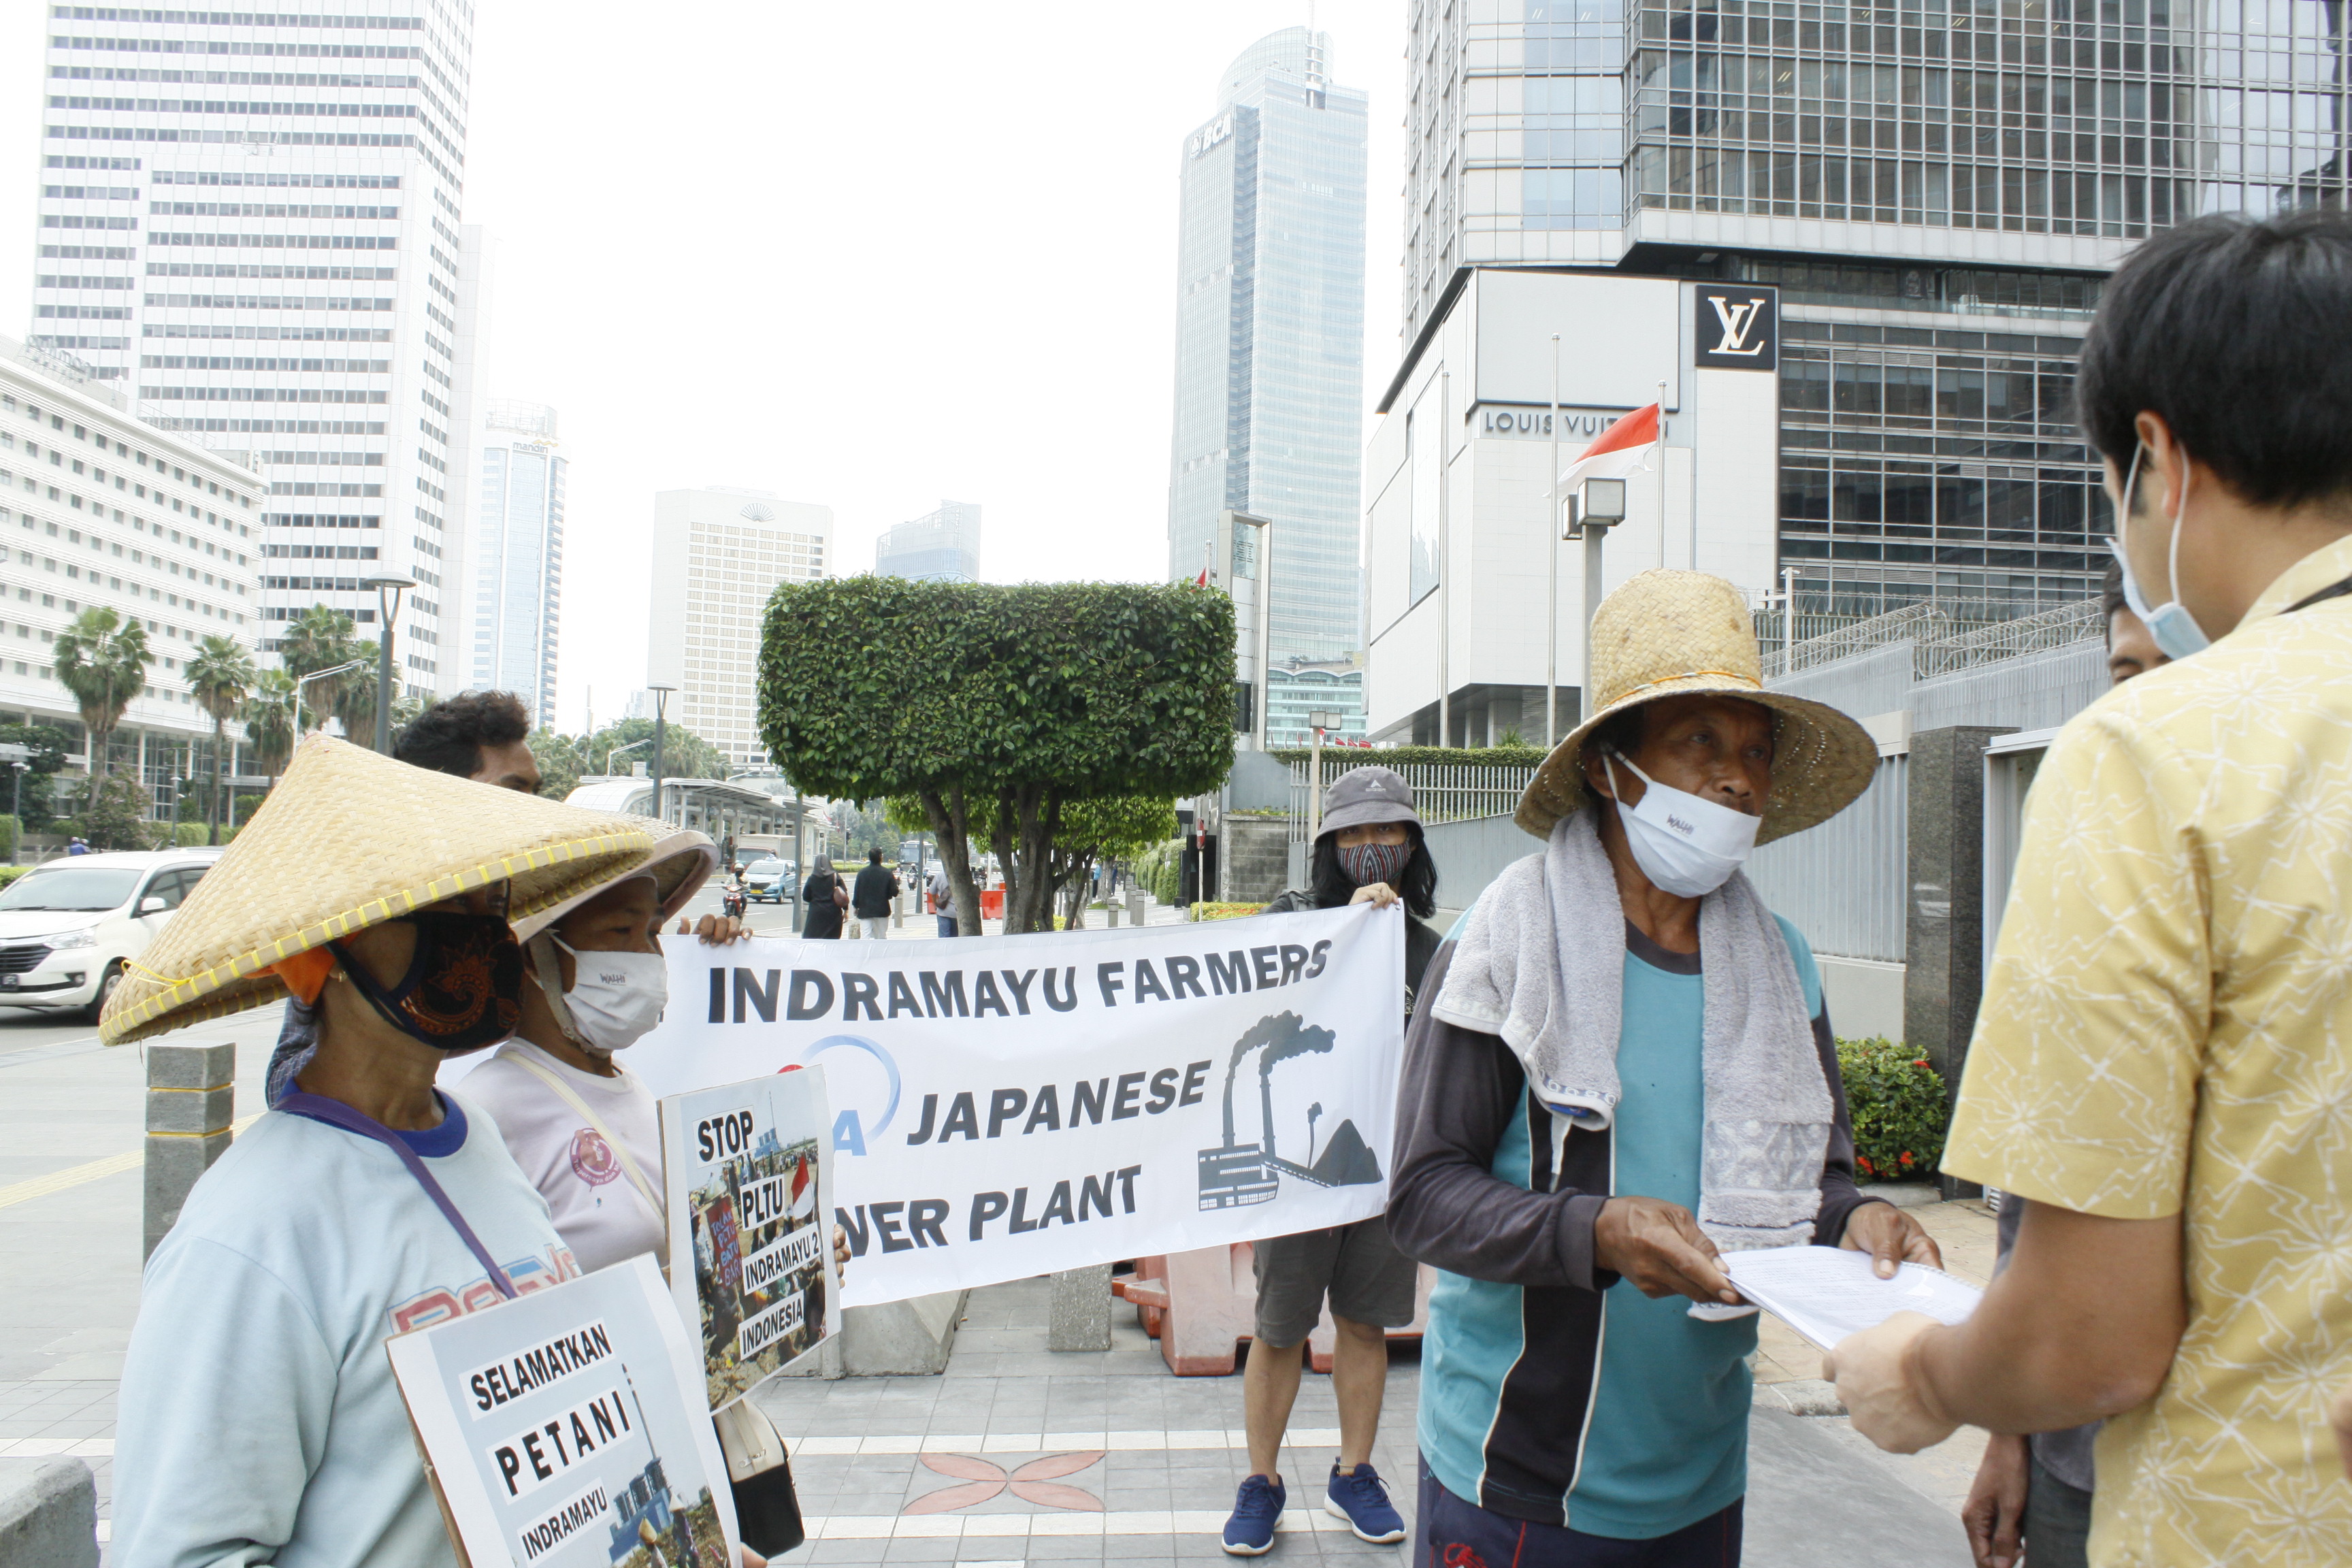 Foe Japan インドネシア石炭火力計画を支援しないで 日本政府 Jicaに要請書を提出 34ヶ国1 218個人 107団体署名